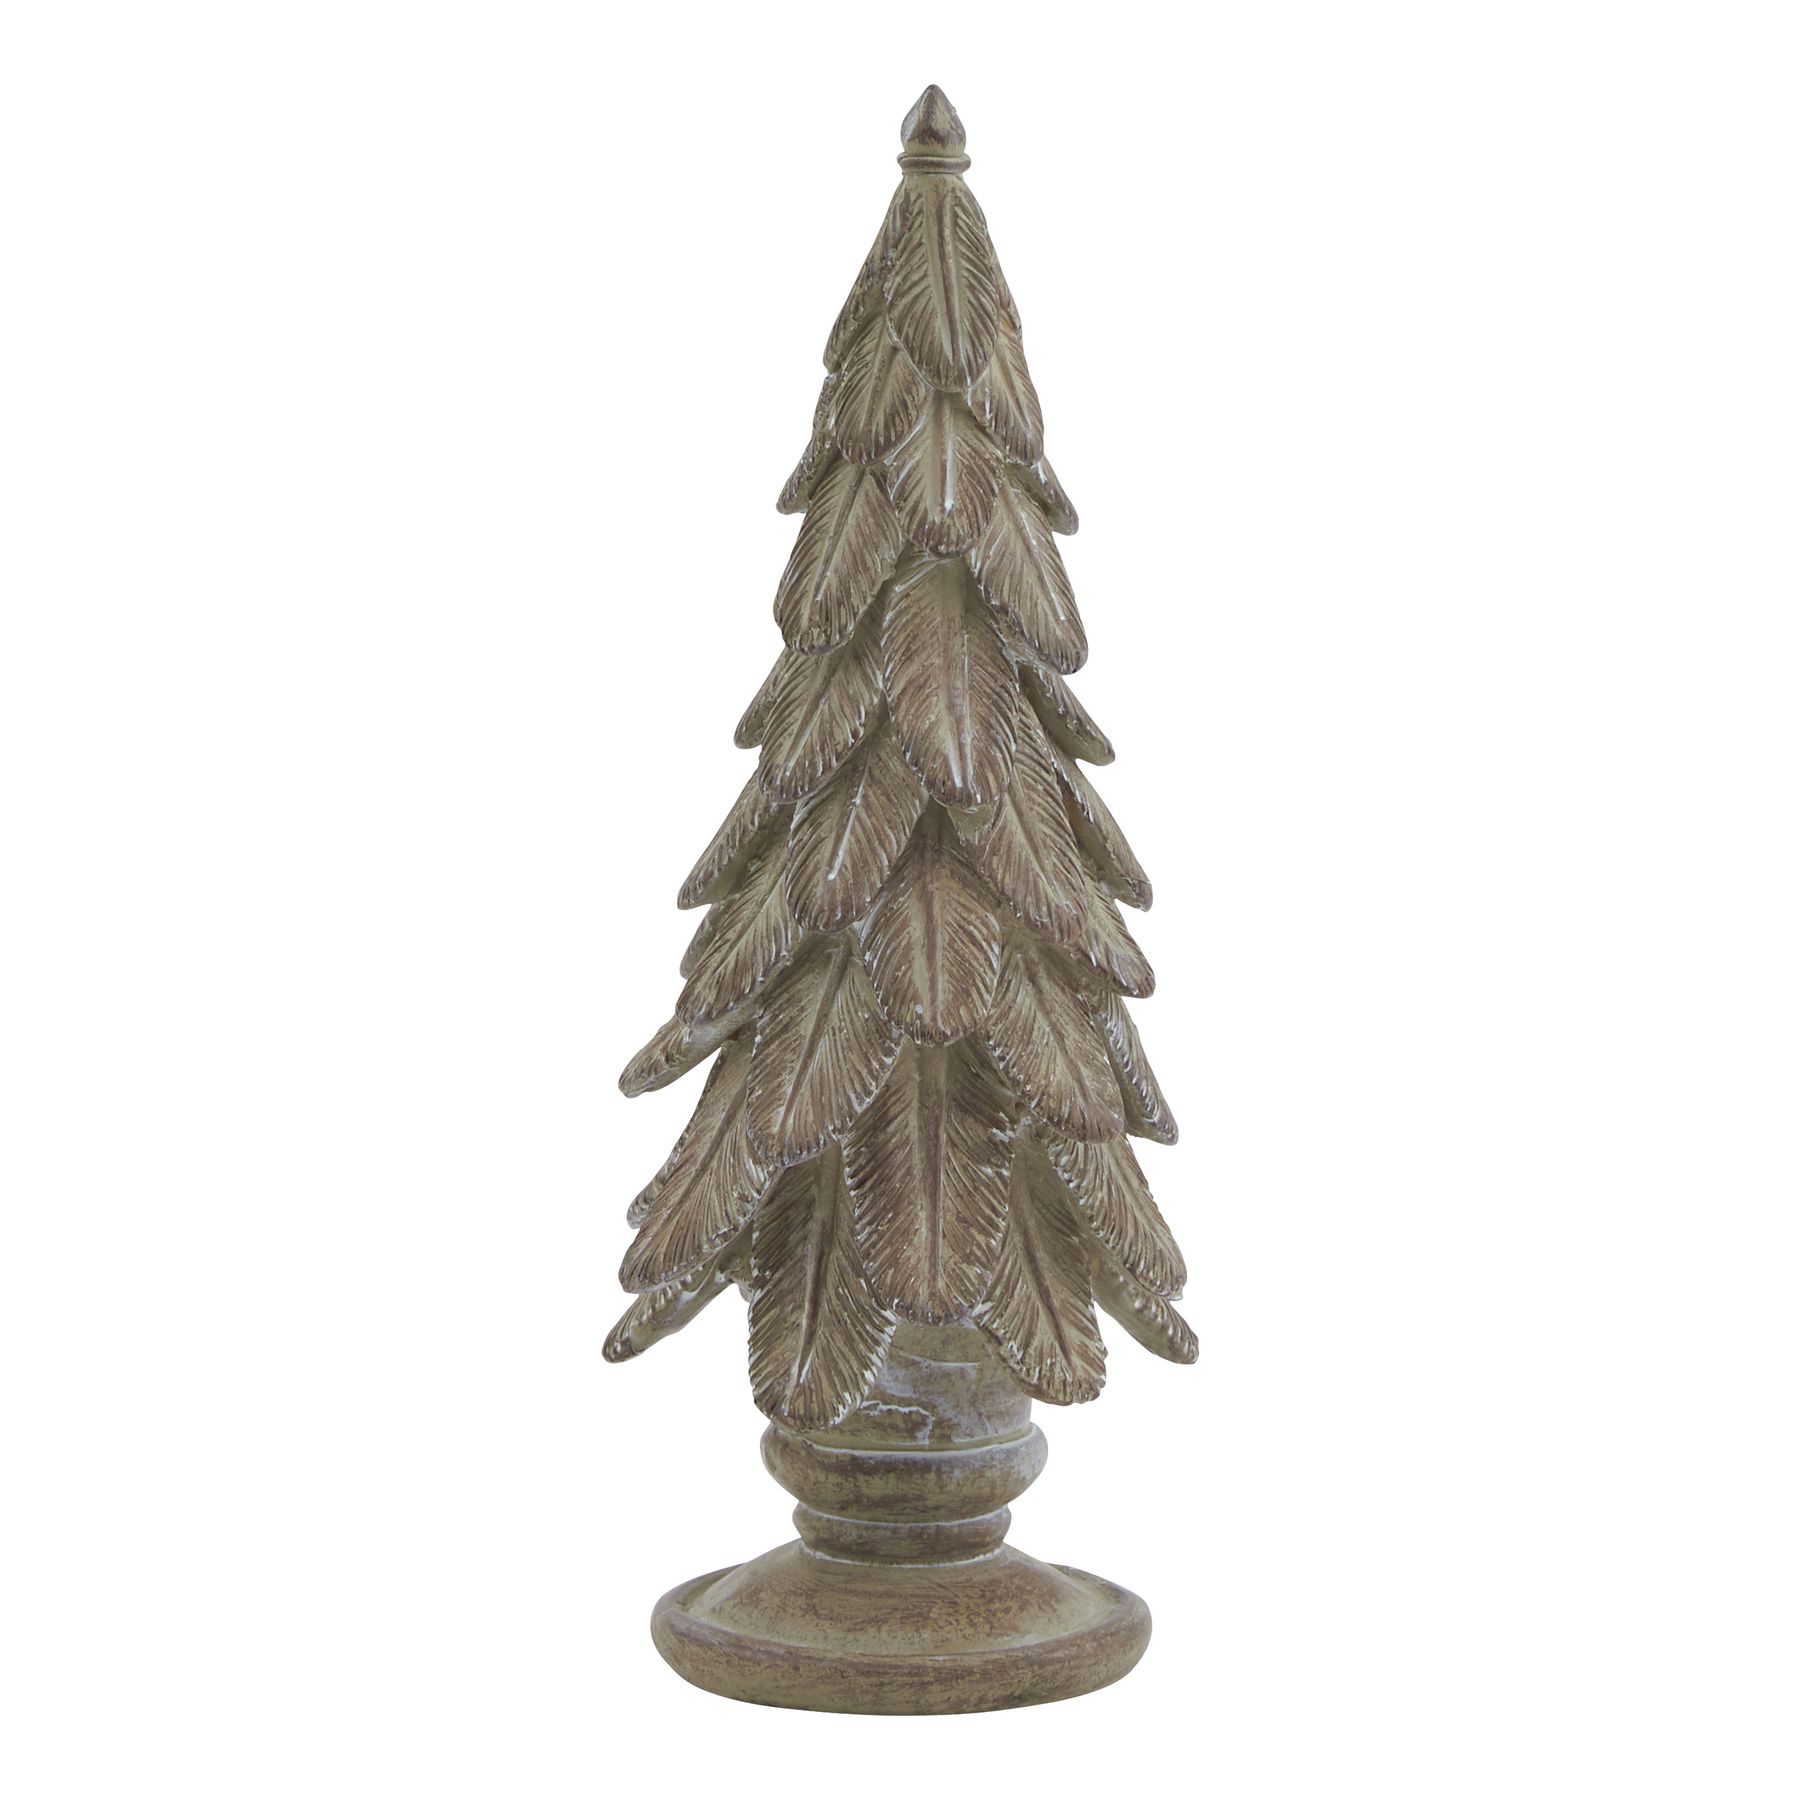 Medium Spruce Tree Sculpture - Image 1